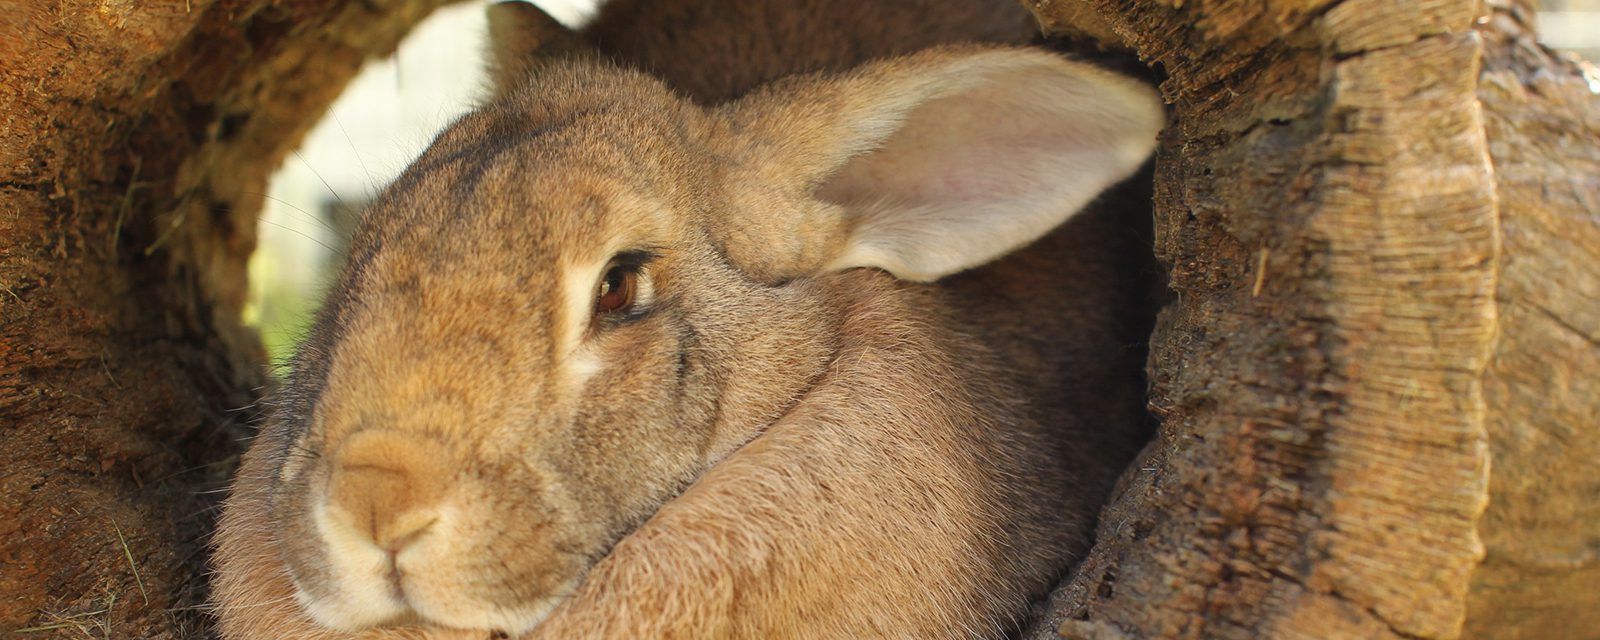 Domestic rabbit in exhibit